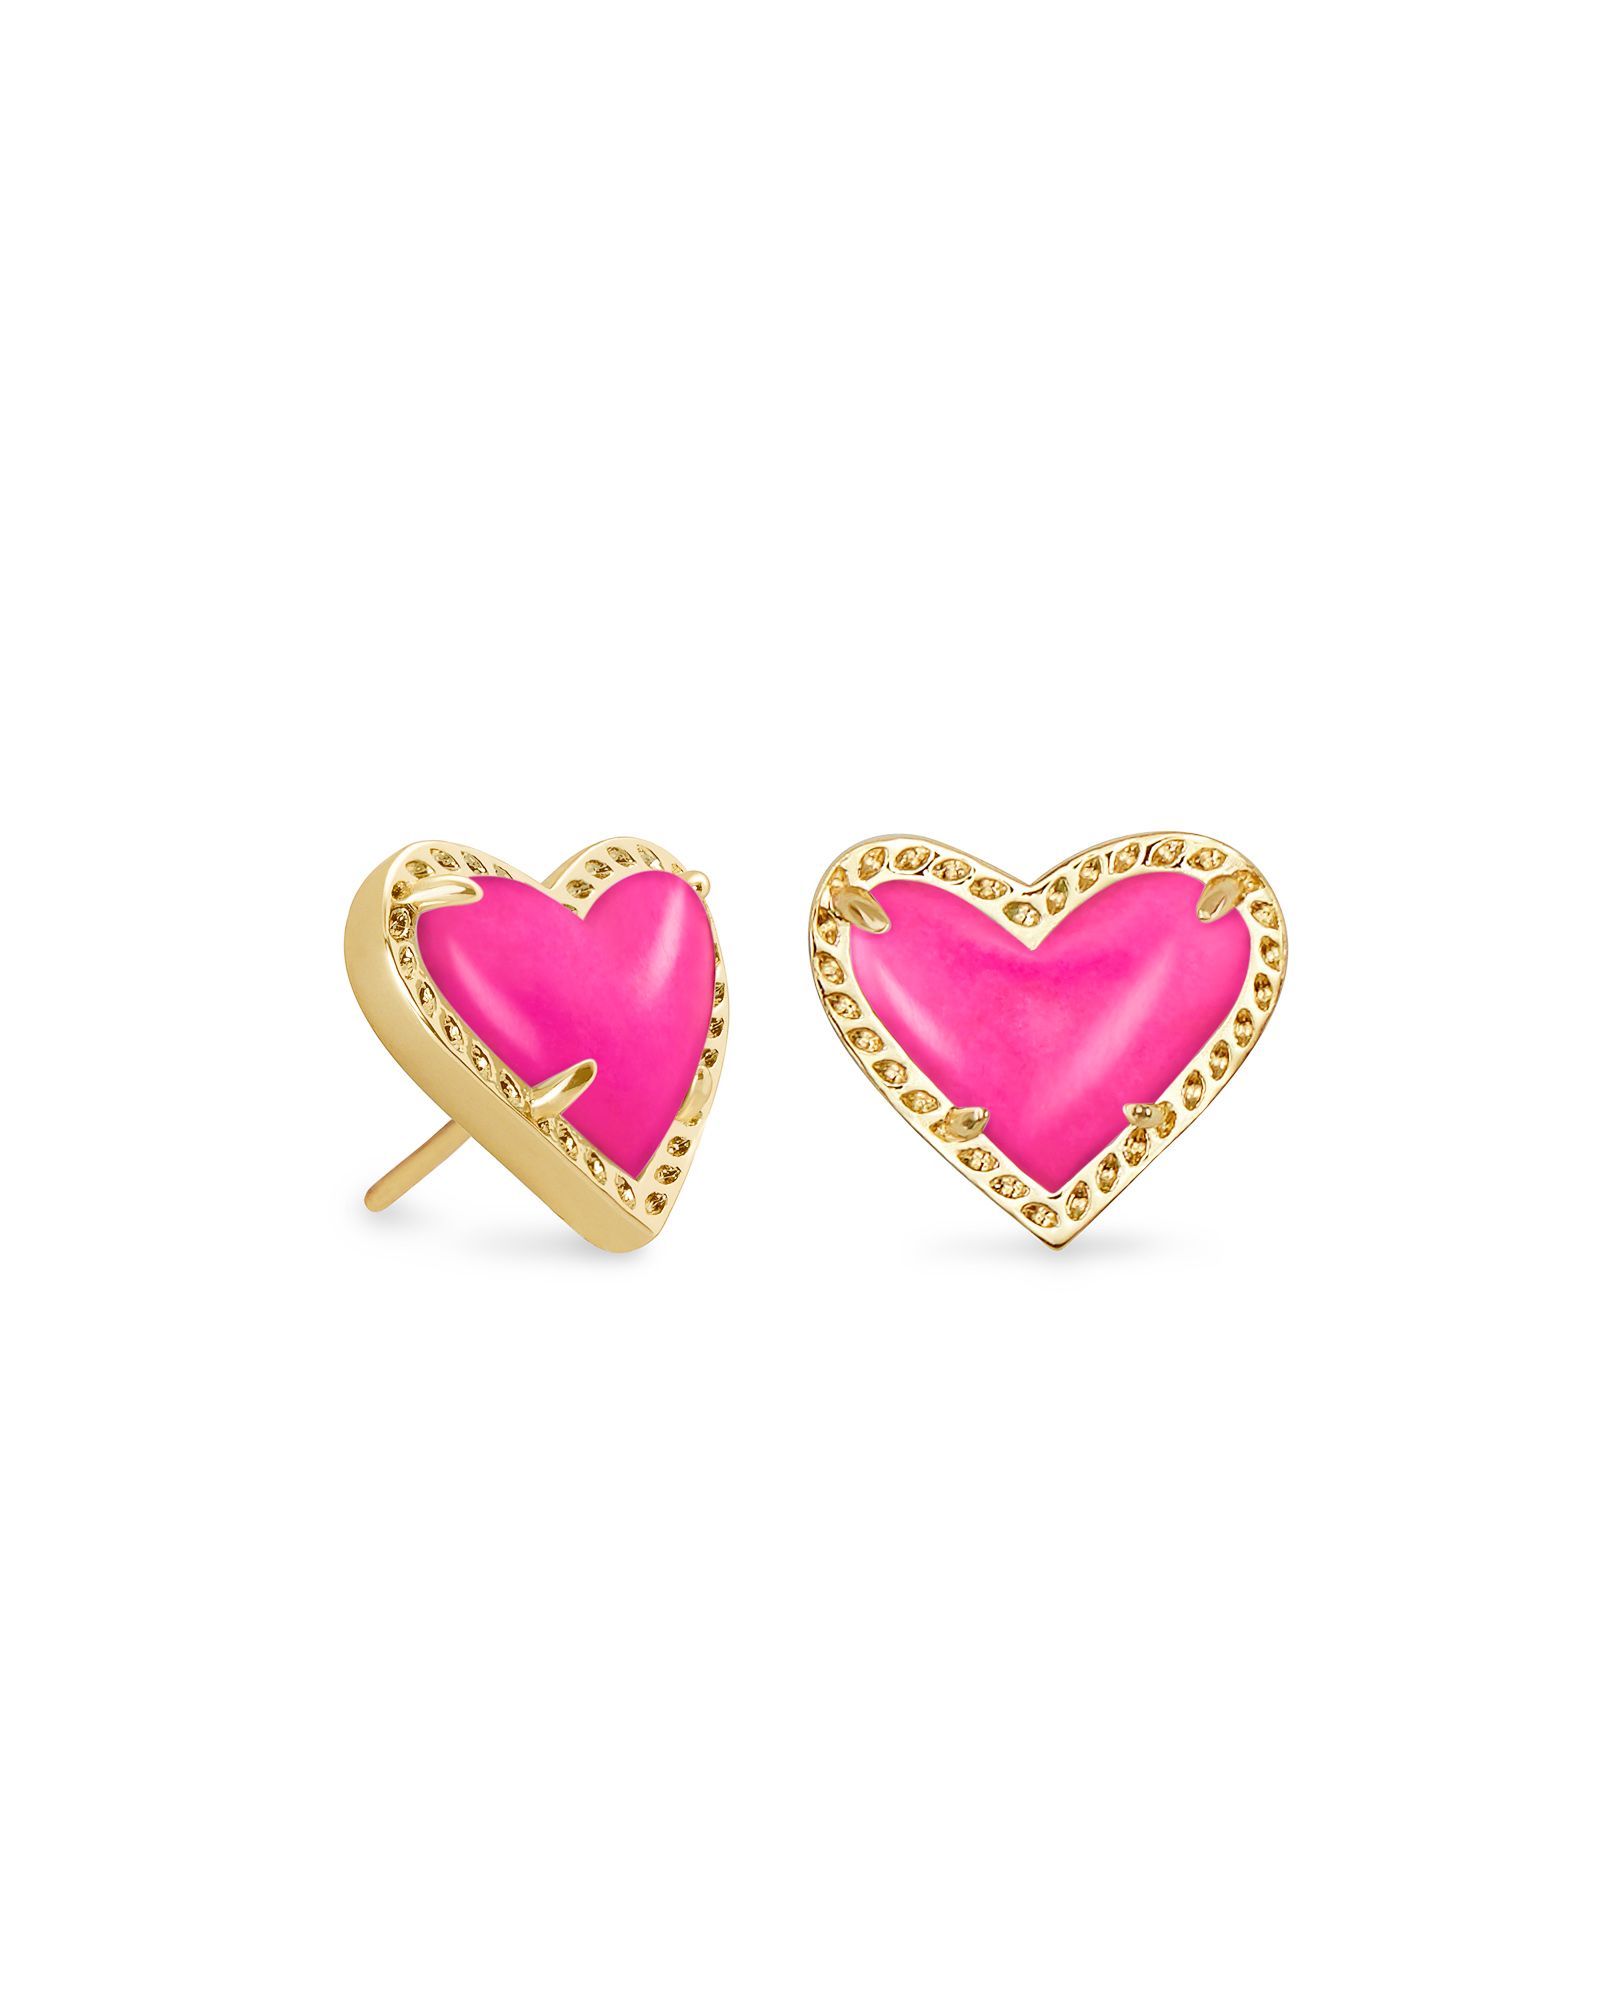 Ari Heart Gold Stud Earrings in Magenta Magnesite | Kendra Scott